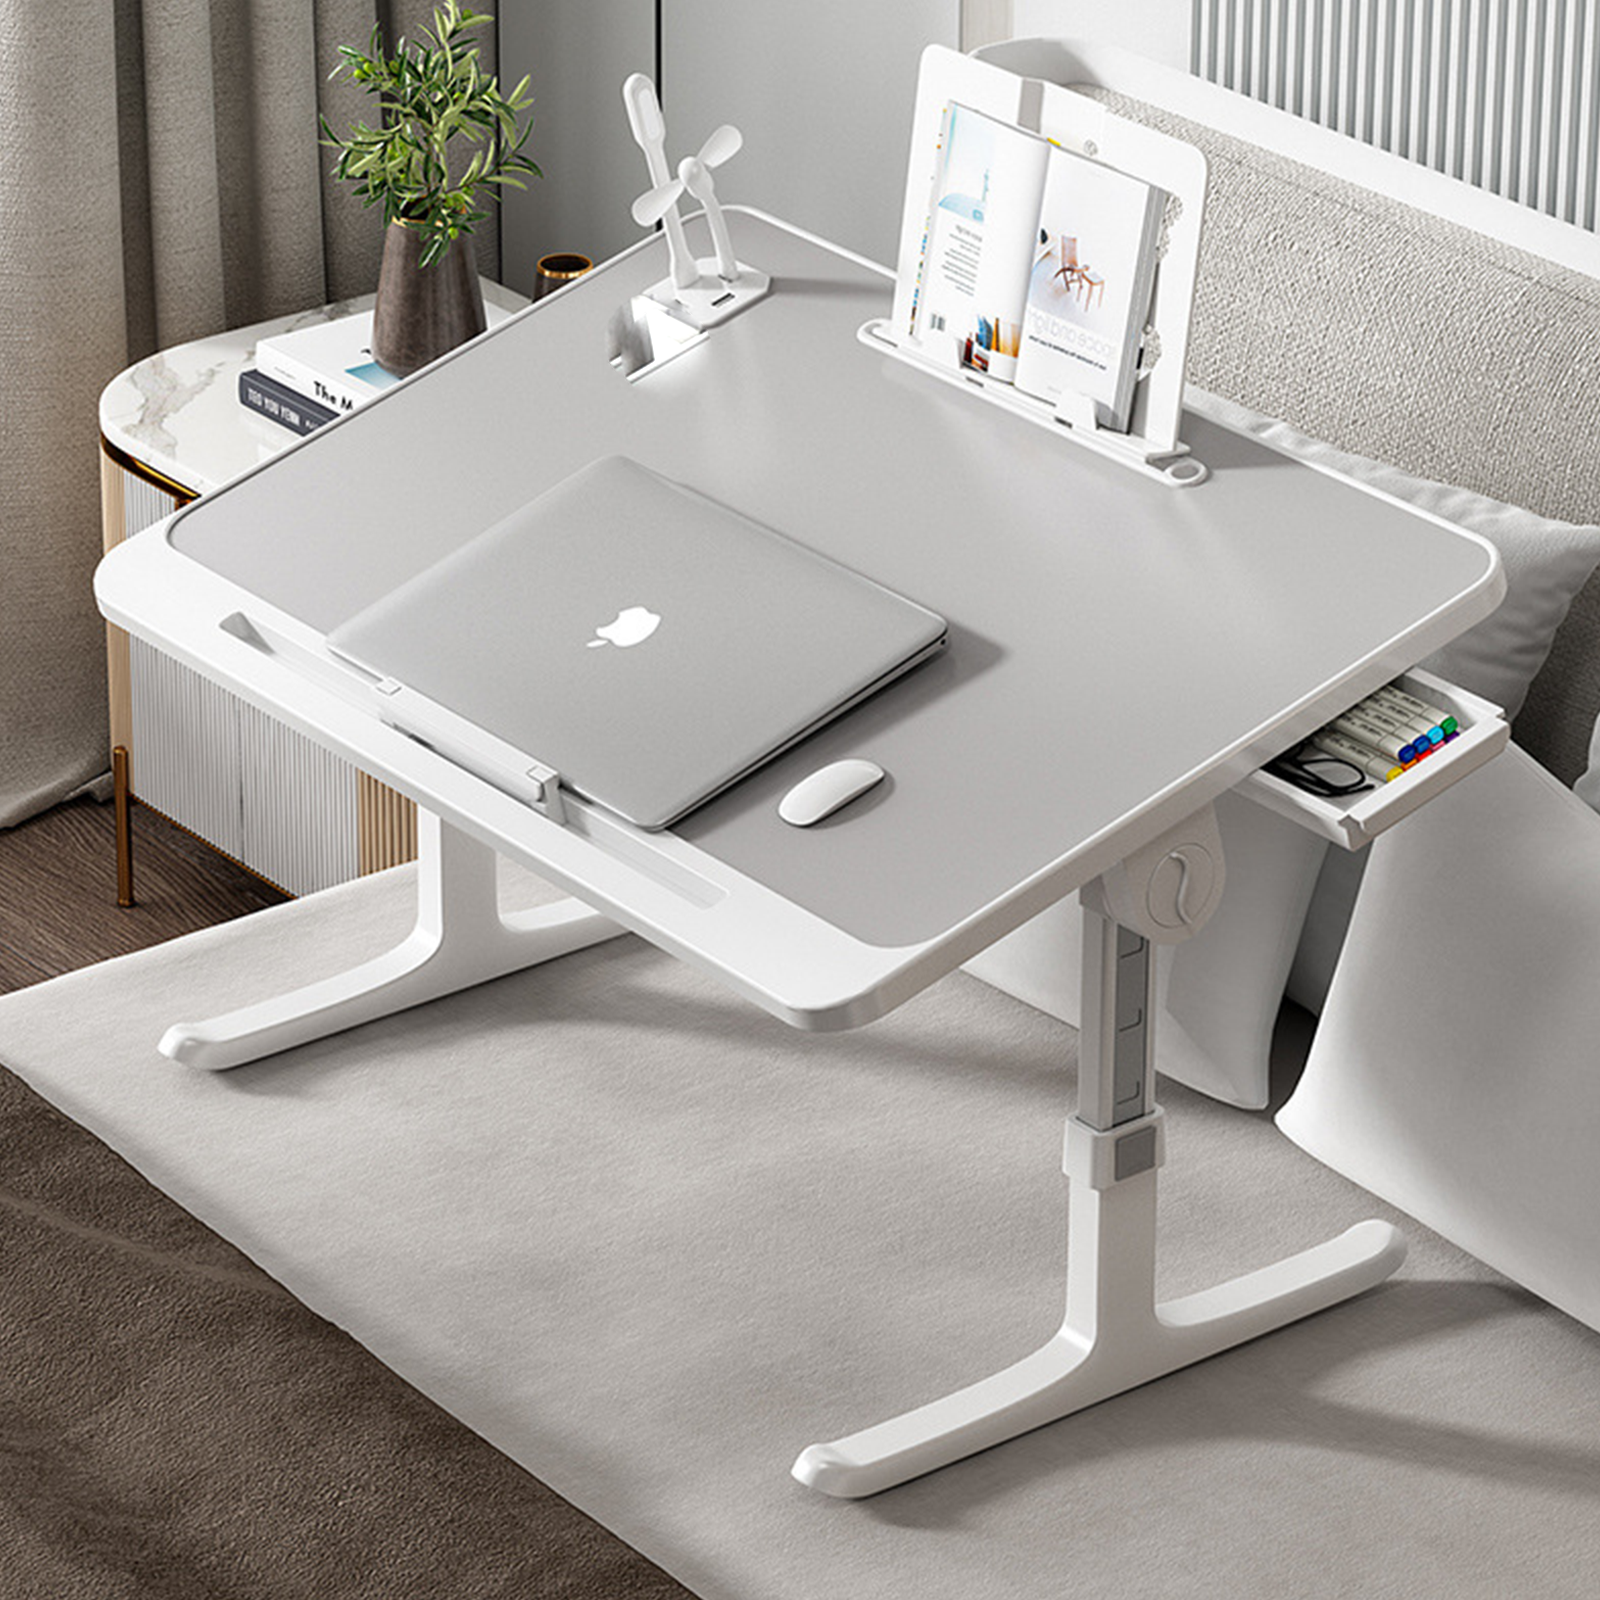 TD® Lit bureau dortoir petite table bureau pliant paresseux simple cha –